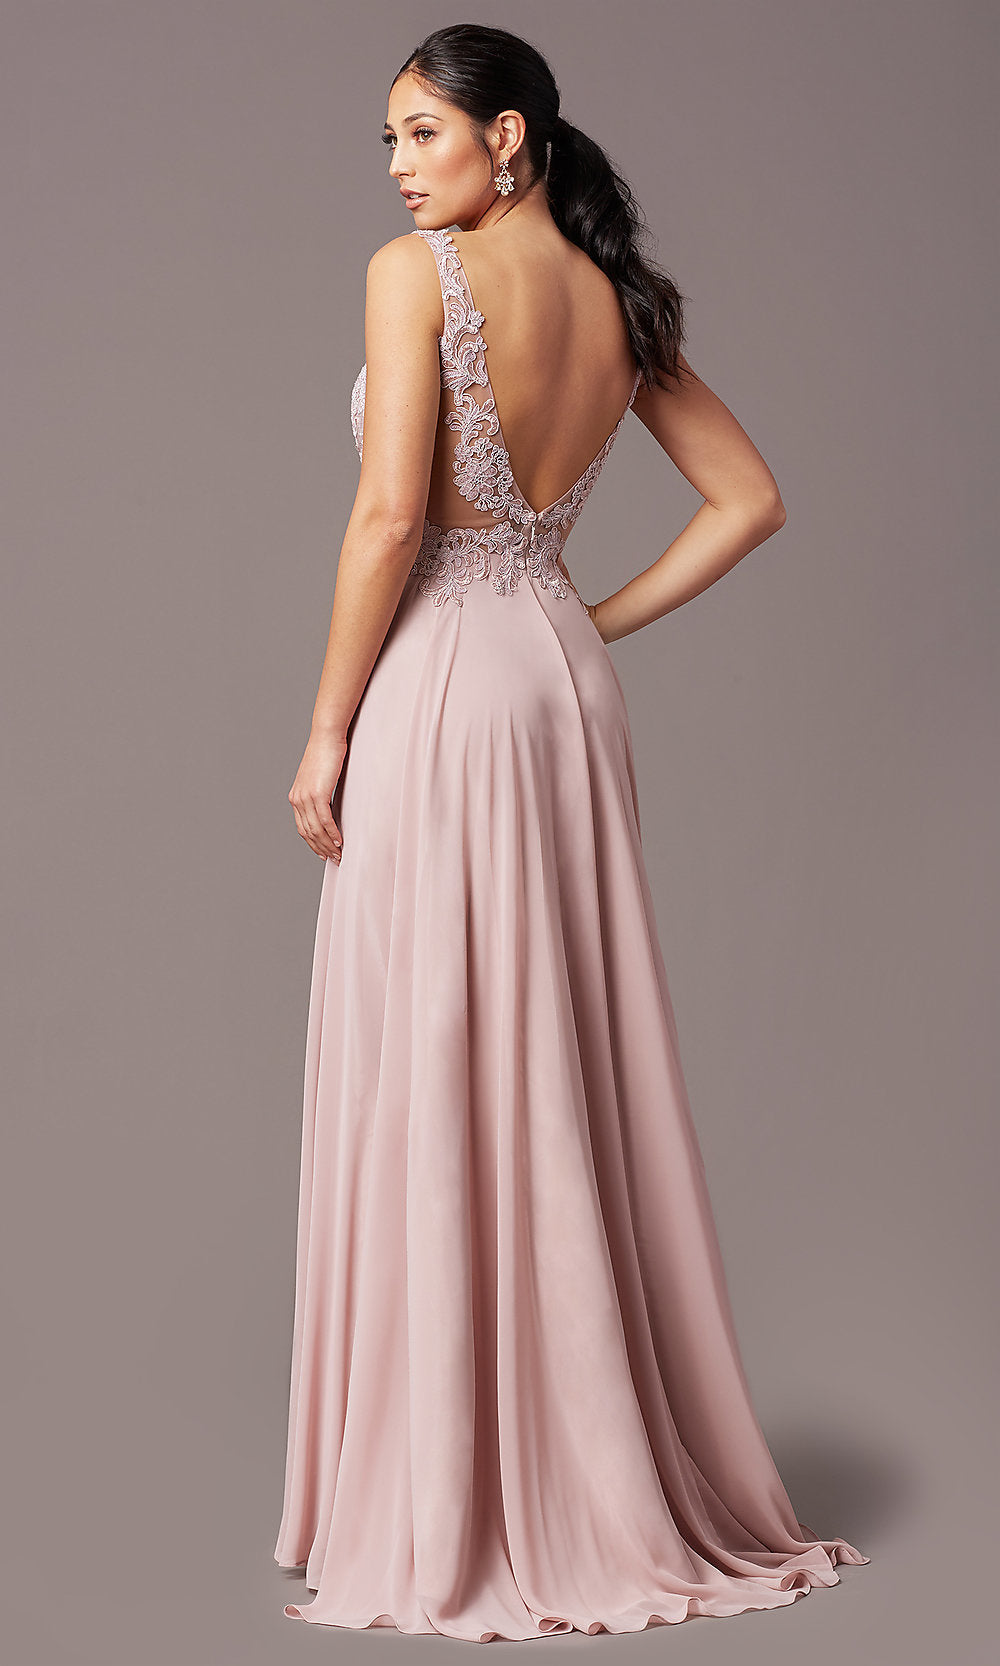 Long Sleeveless V-Neck Prom Dress by PromGirl